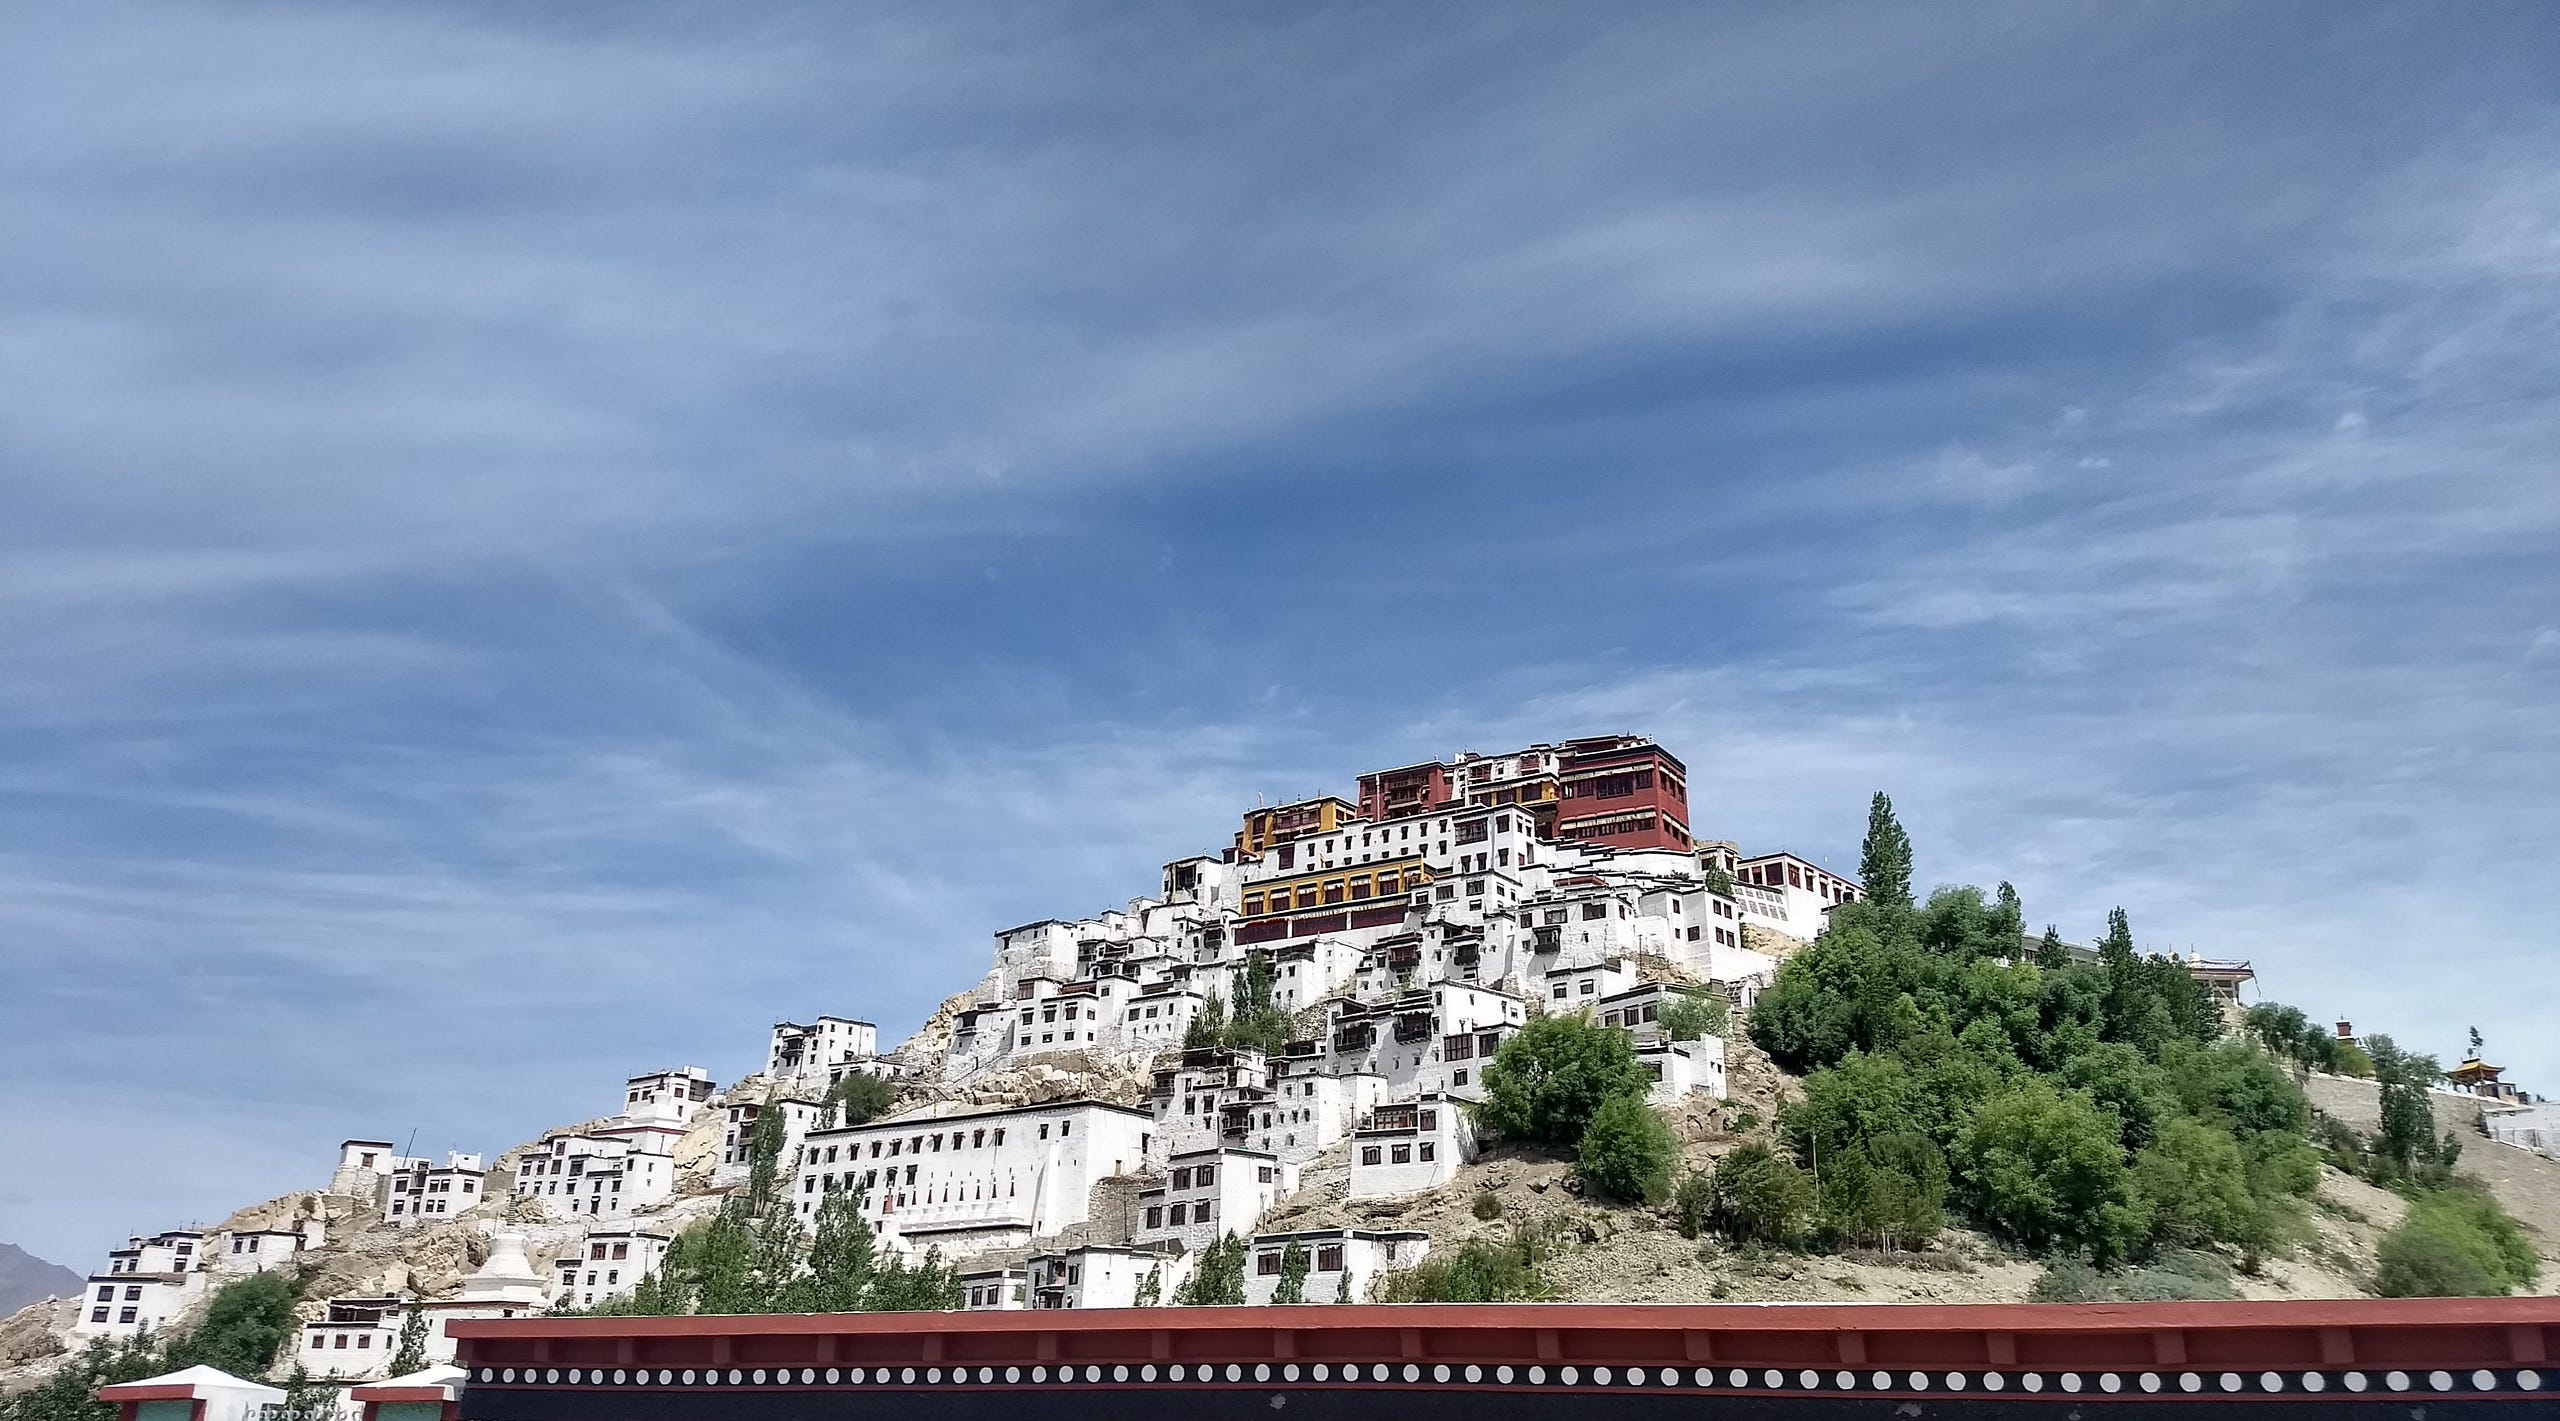 Location: Thiksay Monastery, Leh Manali Highway, India. Photographer: Self. 